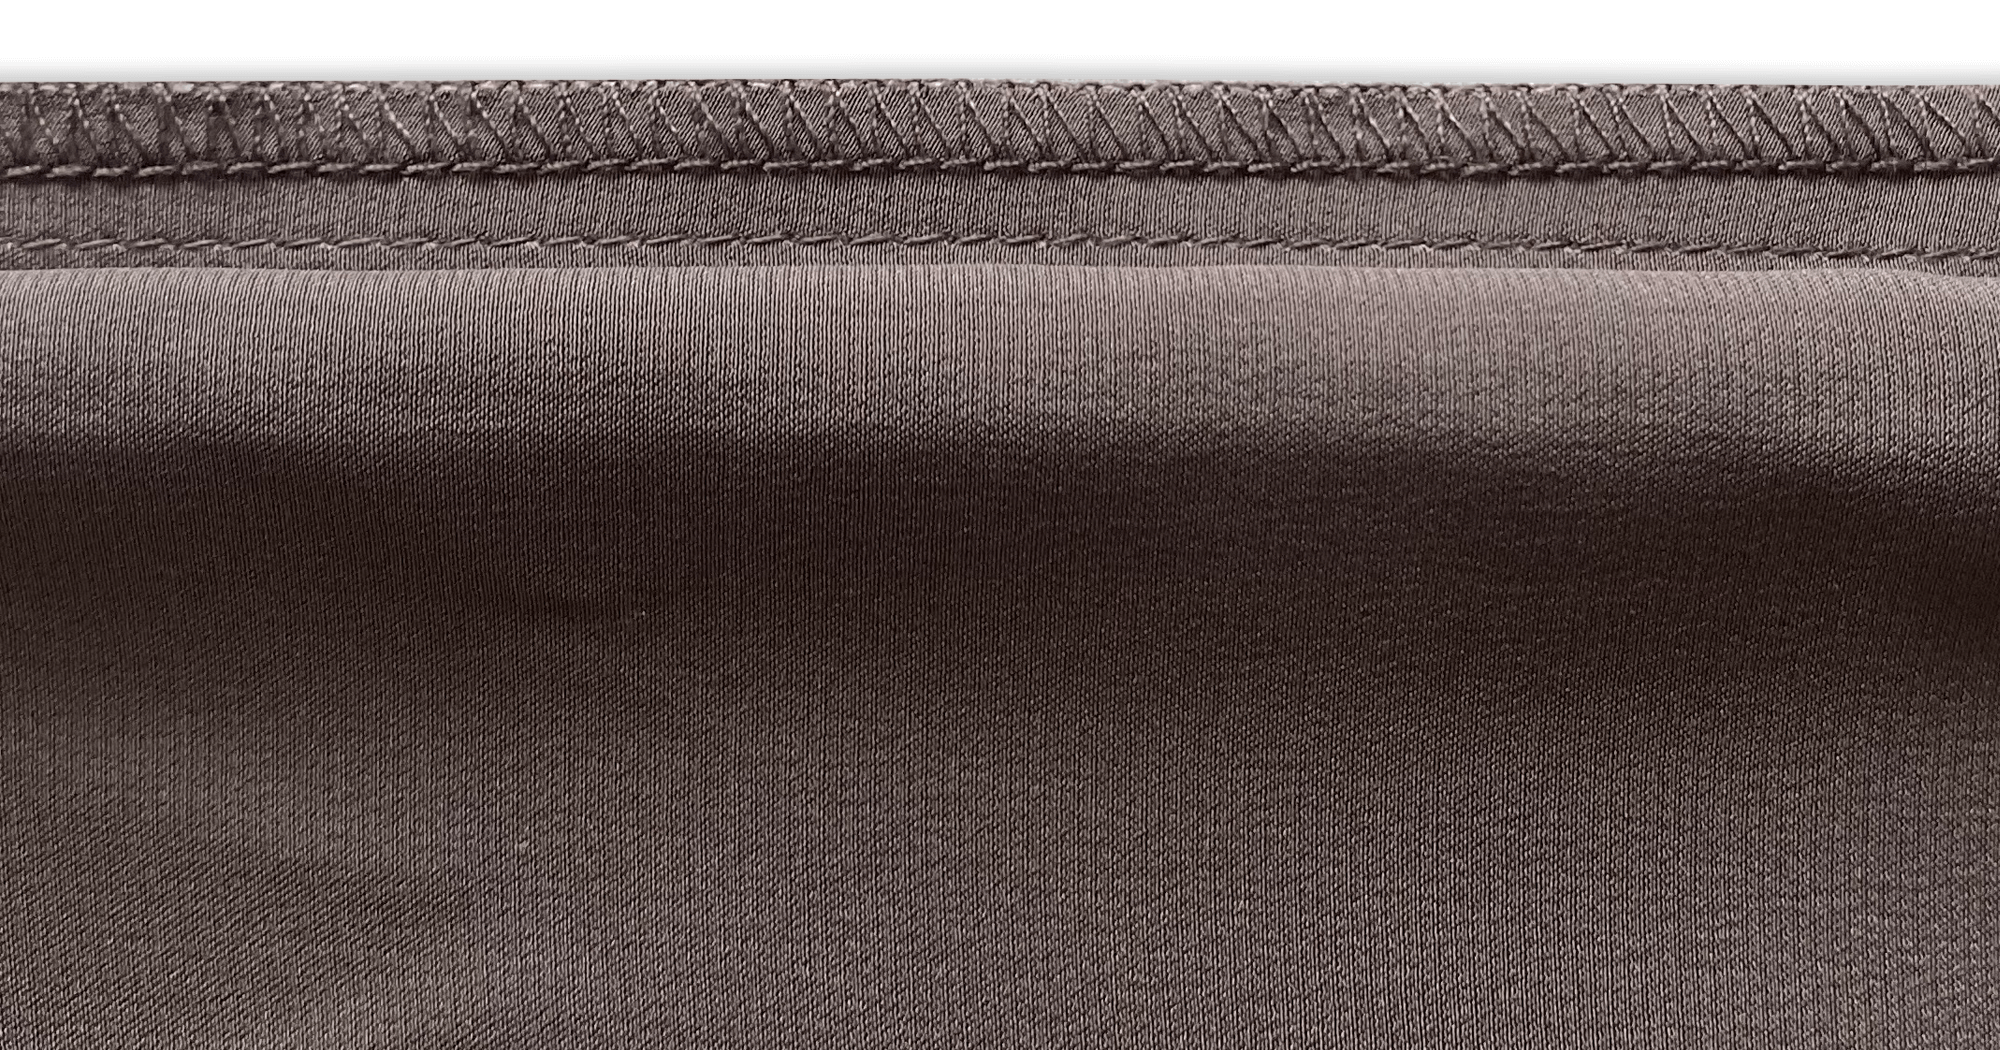 grey-silk-pillowcase-double-overlock-stitching